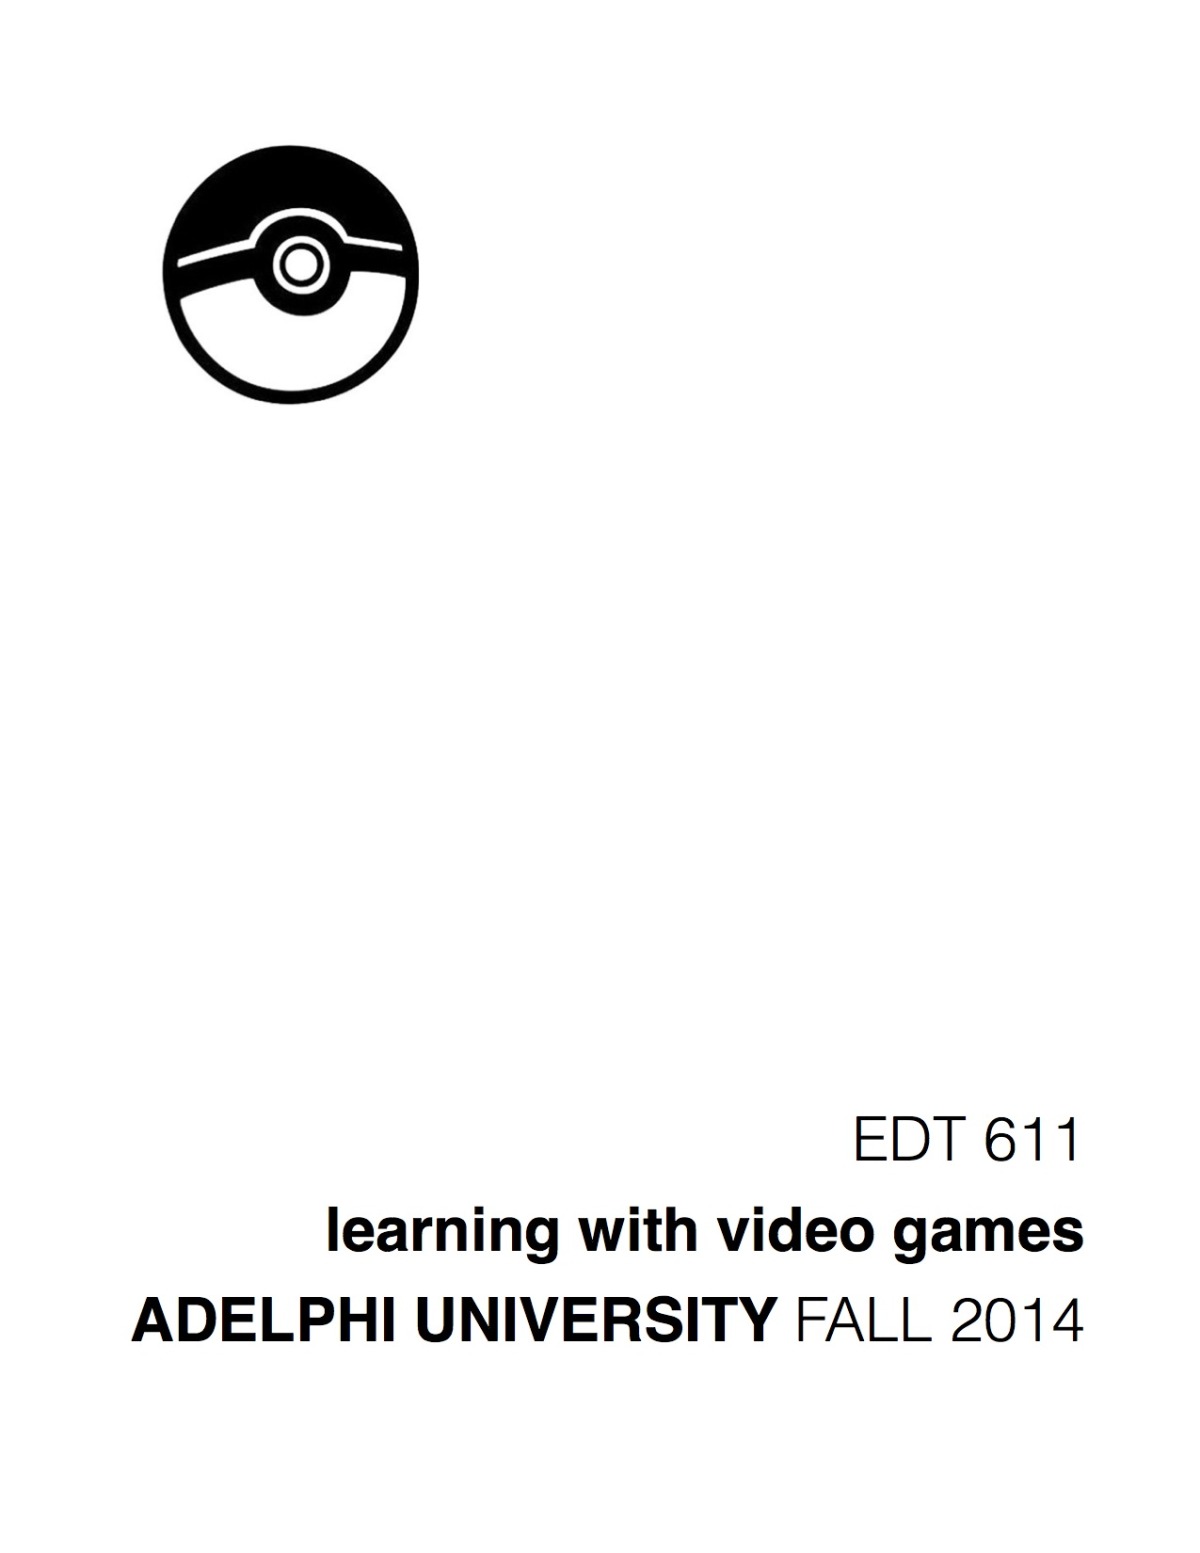 flyer 6 - pokemon.jpg